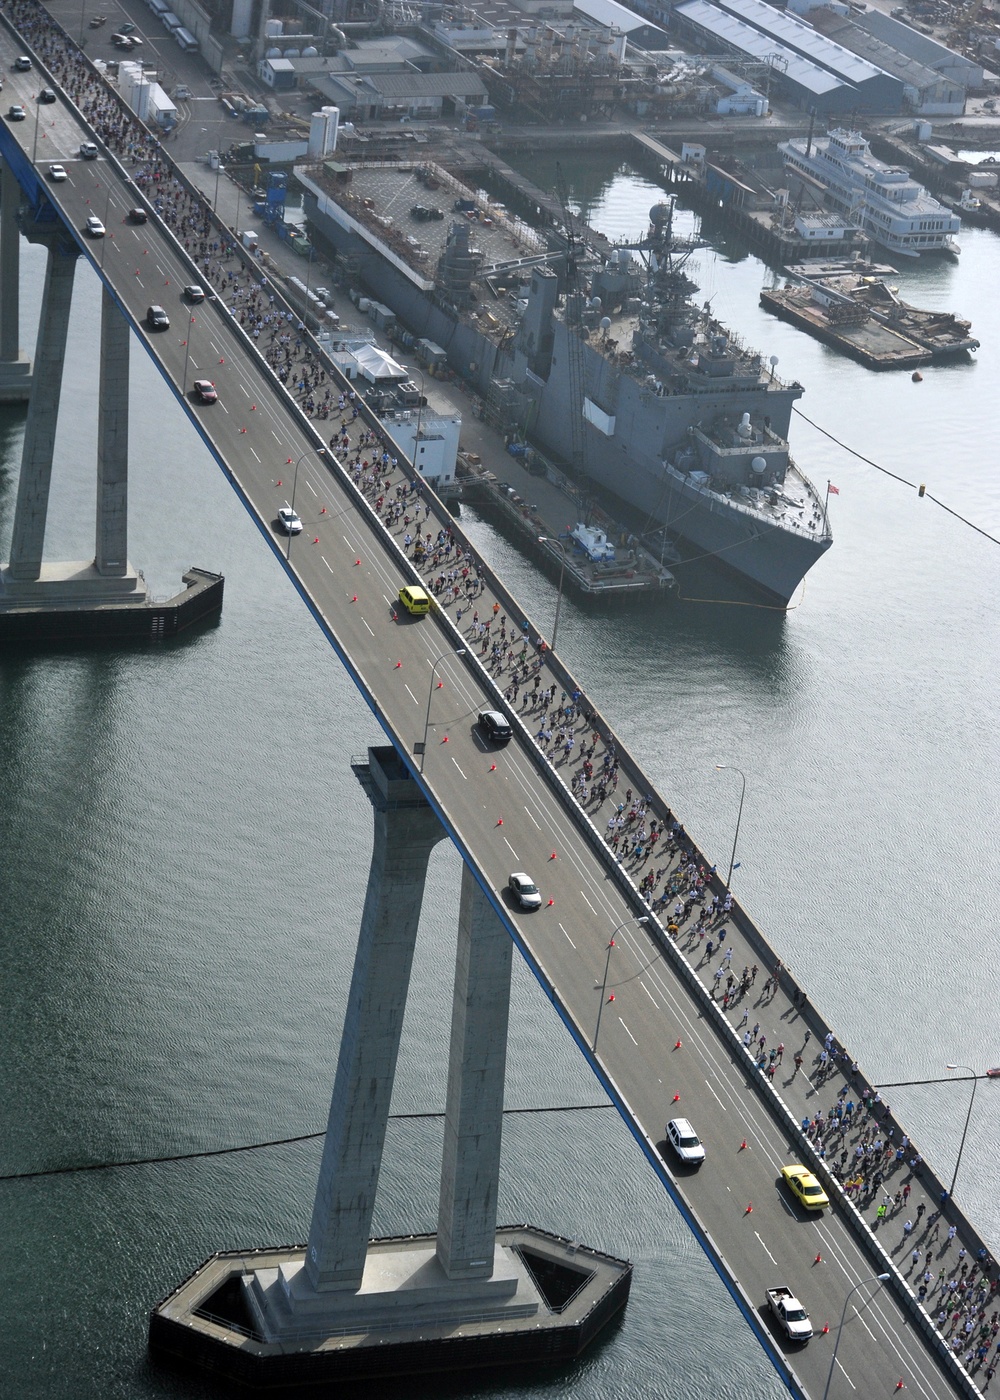 DVIDS Images Navy's 26th Bay Bridge Run/Walk [Image 5 of 8]